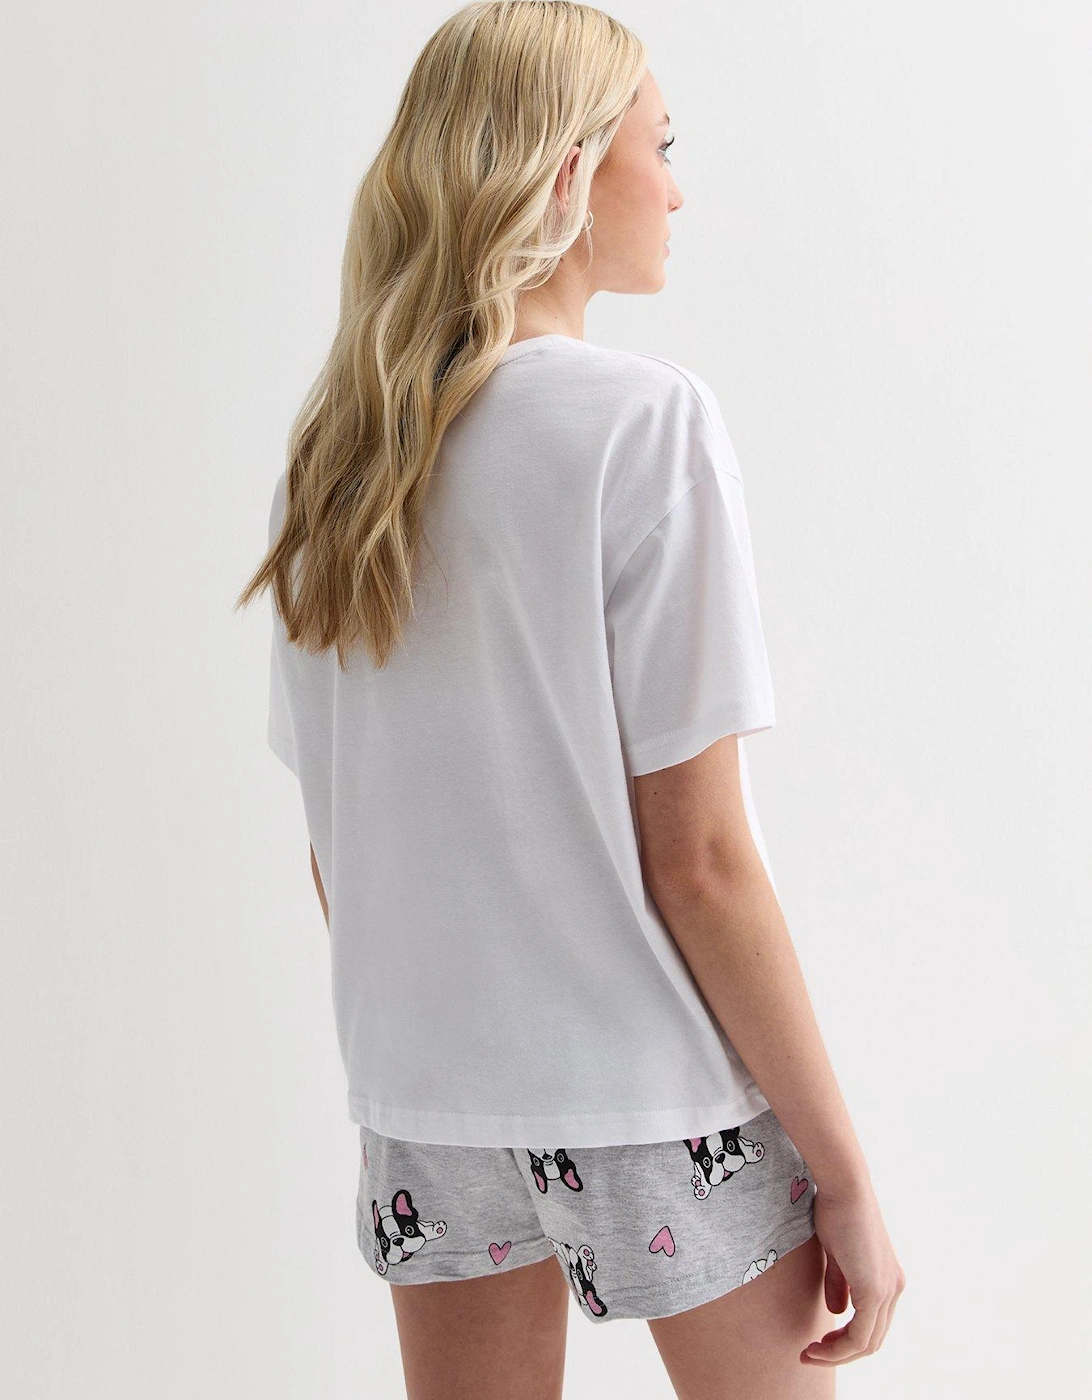 Girls White Short Pyjama Set with Frenchie Logo